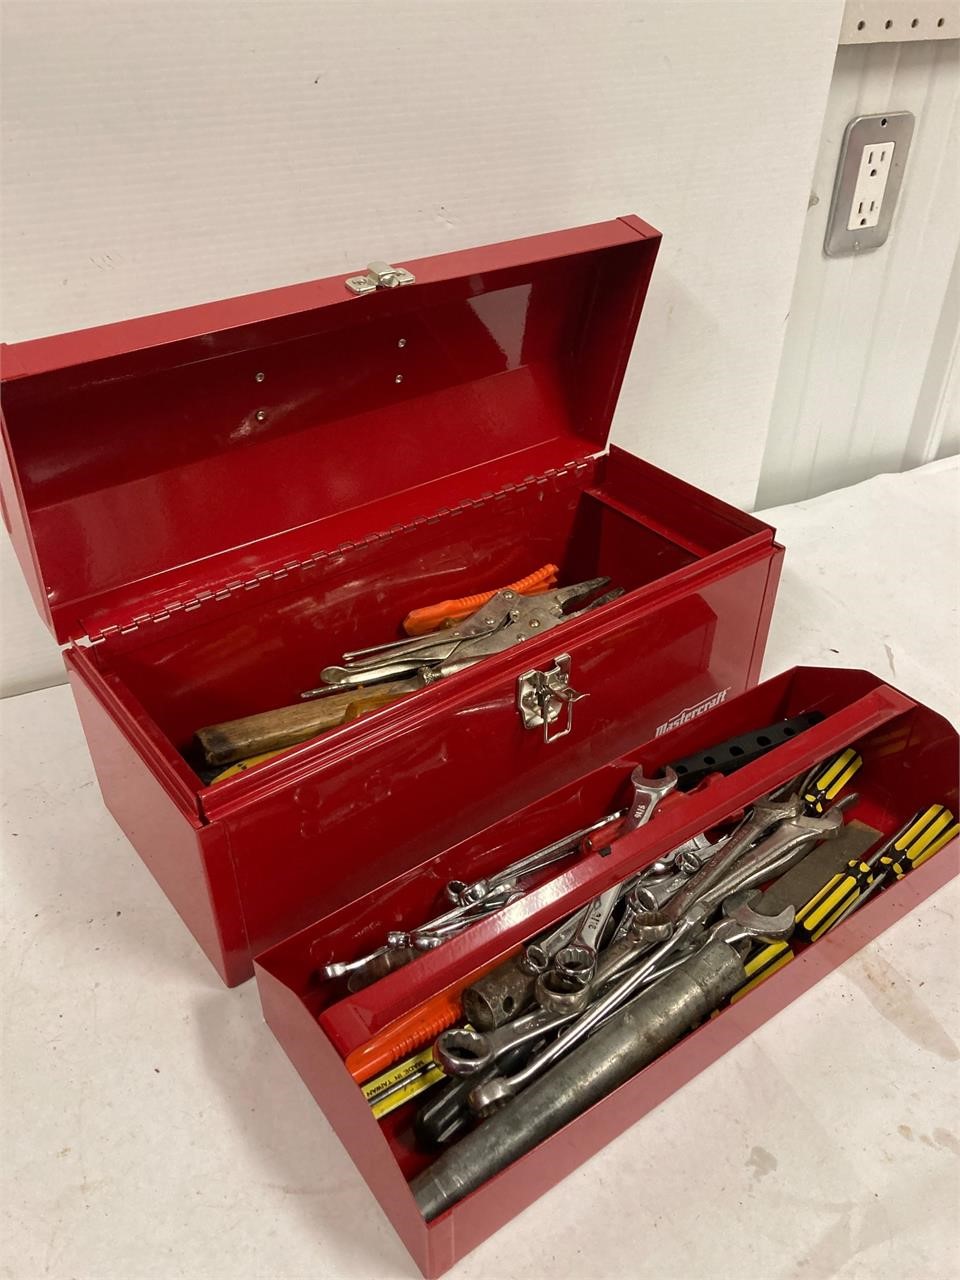 Mastercraft tool box with tools.